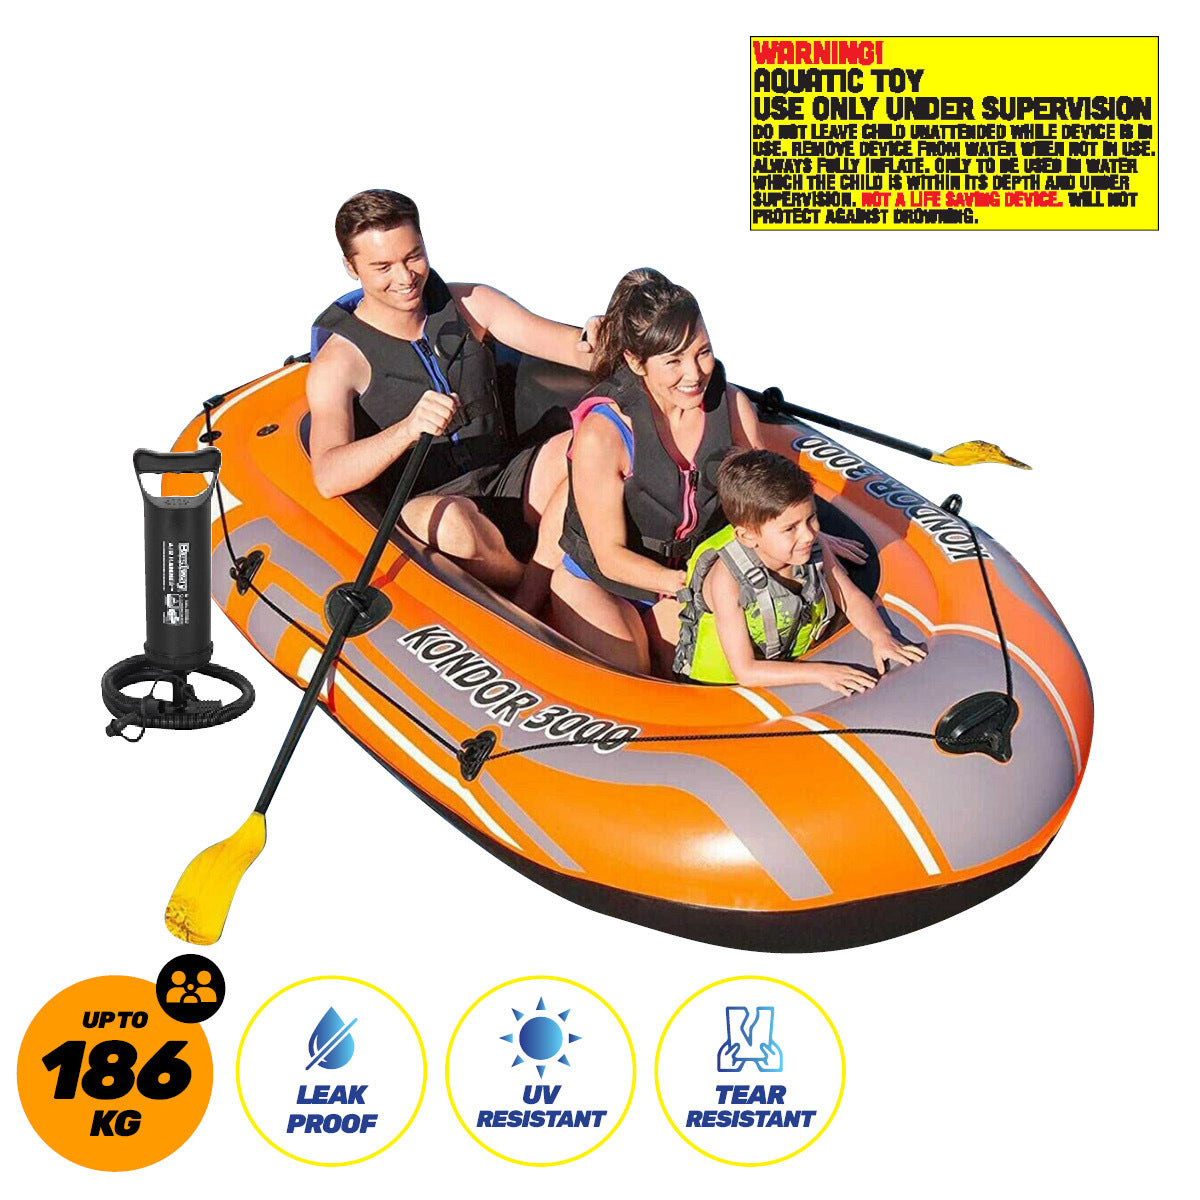 Kondor 3000 Inflatable Boat UV Resistant Leak Proof Beach Pool Fun